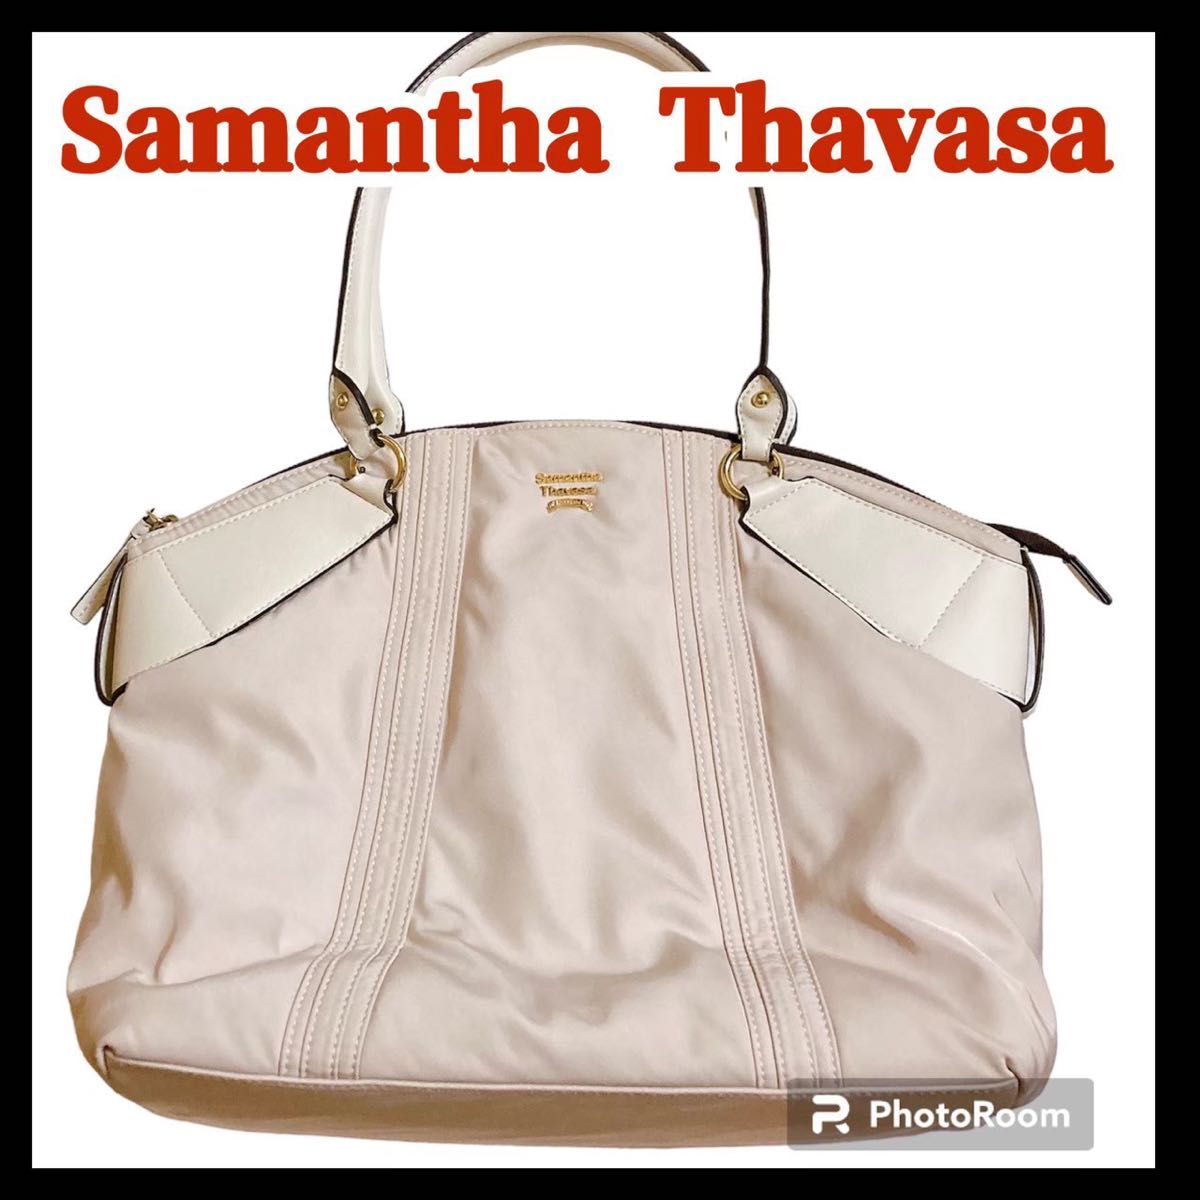 SamanthaThavasa サマンサタバサ ハンドバッグ ボストントートバッグ 白 ホワイト ナイロン 大容量 A4 